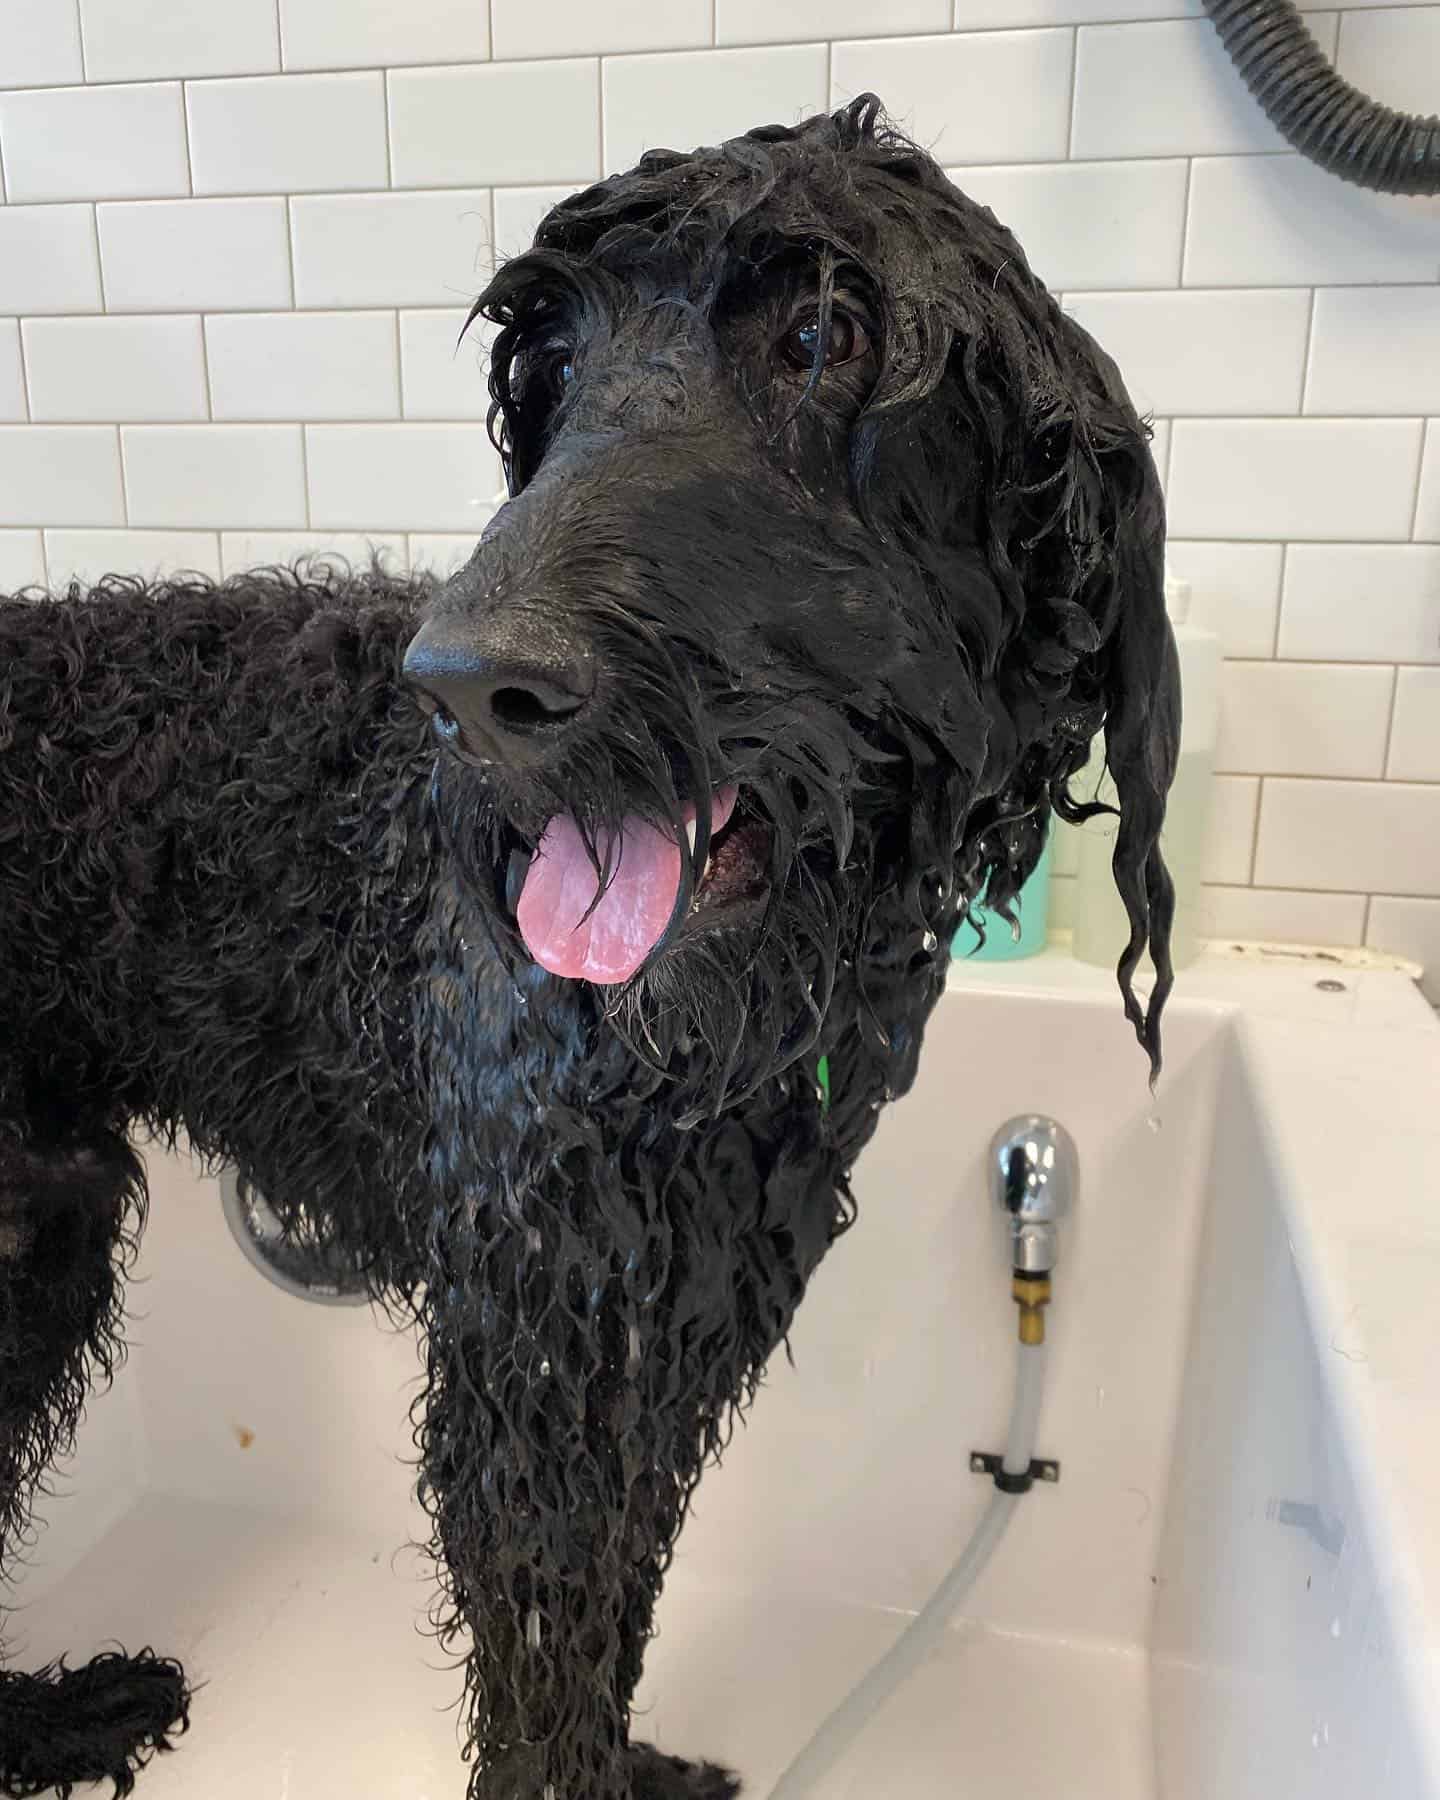 Clean dog after a bath